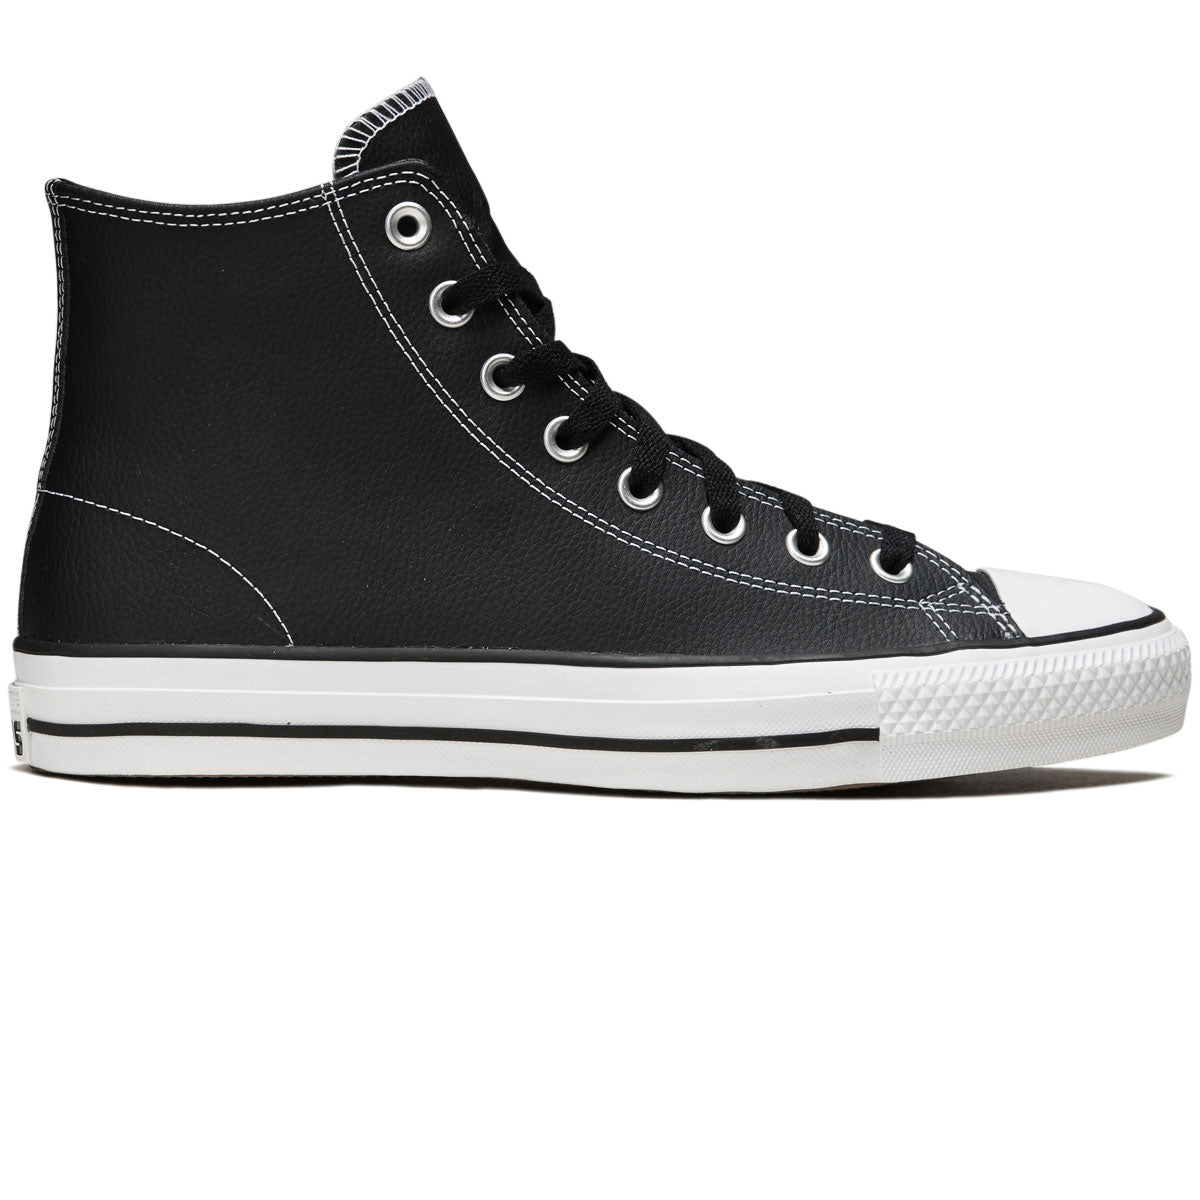 Converse Ctas Pro Hi Shoes - Black/White/Black 2023 image 1